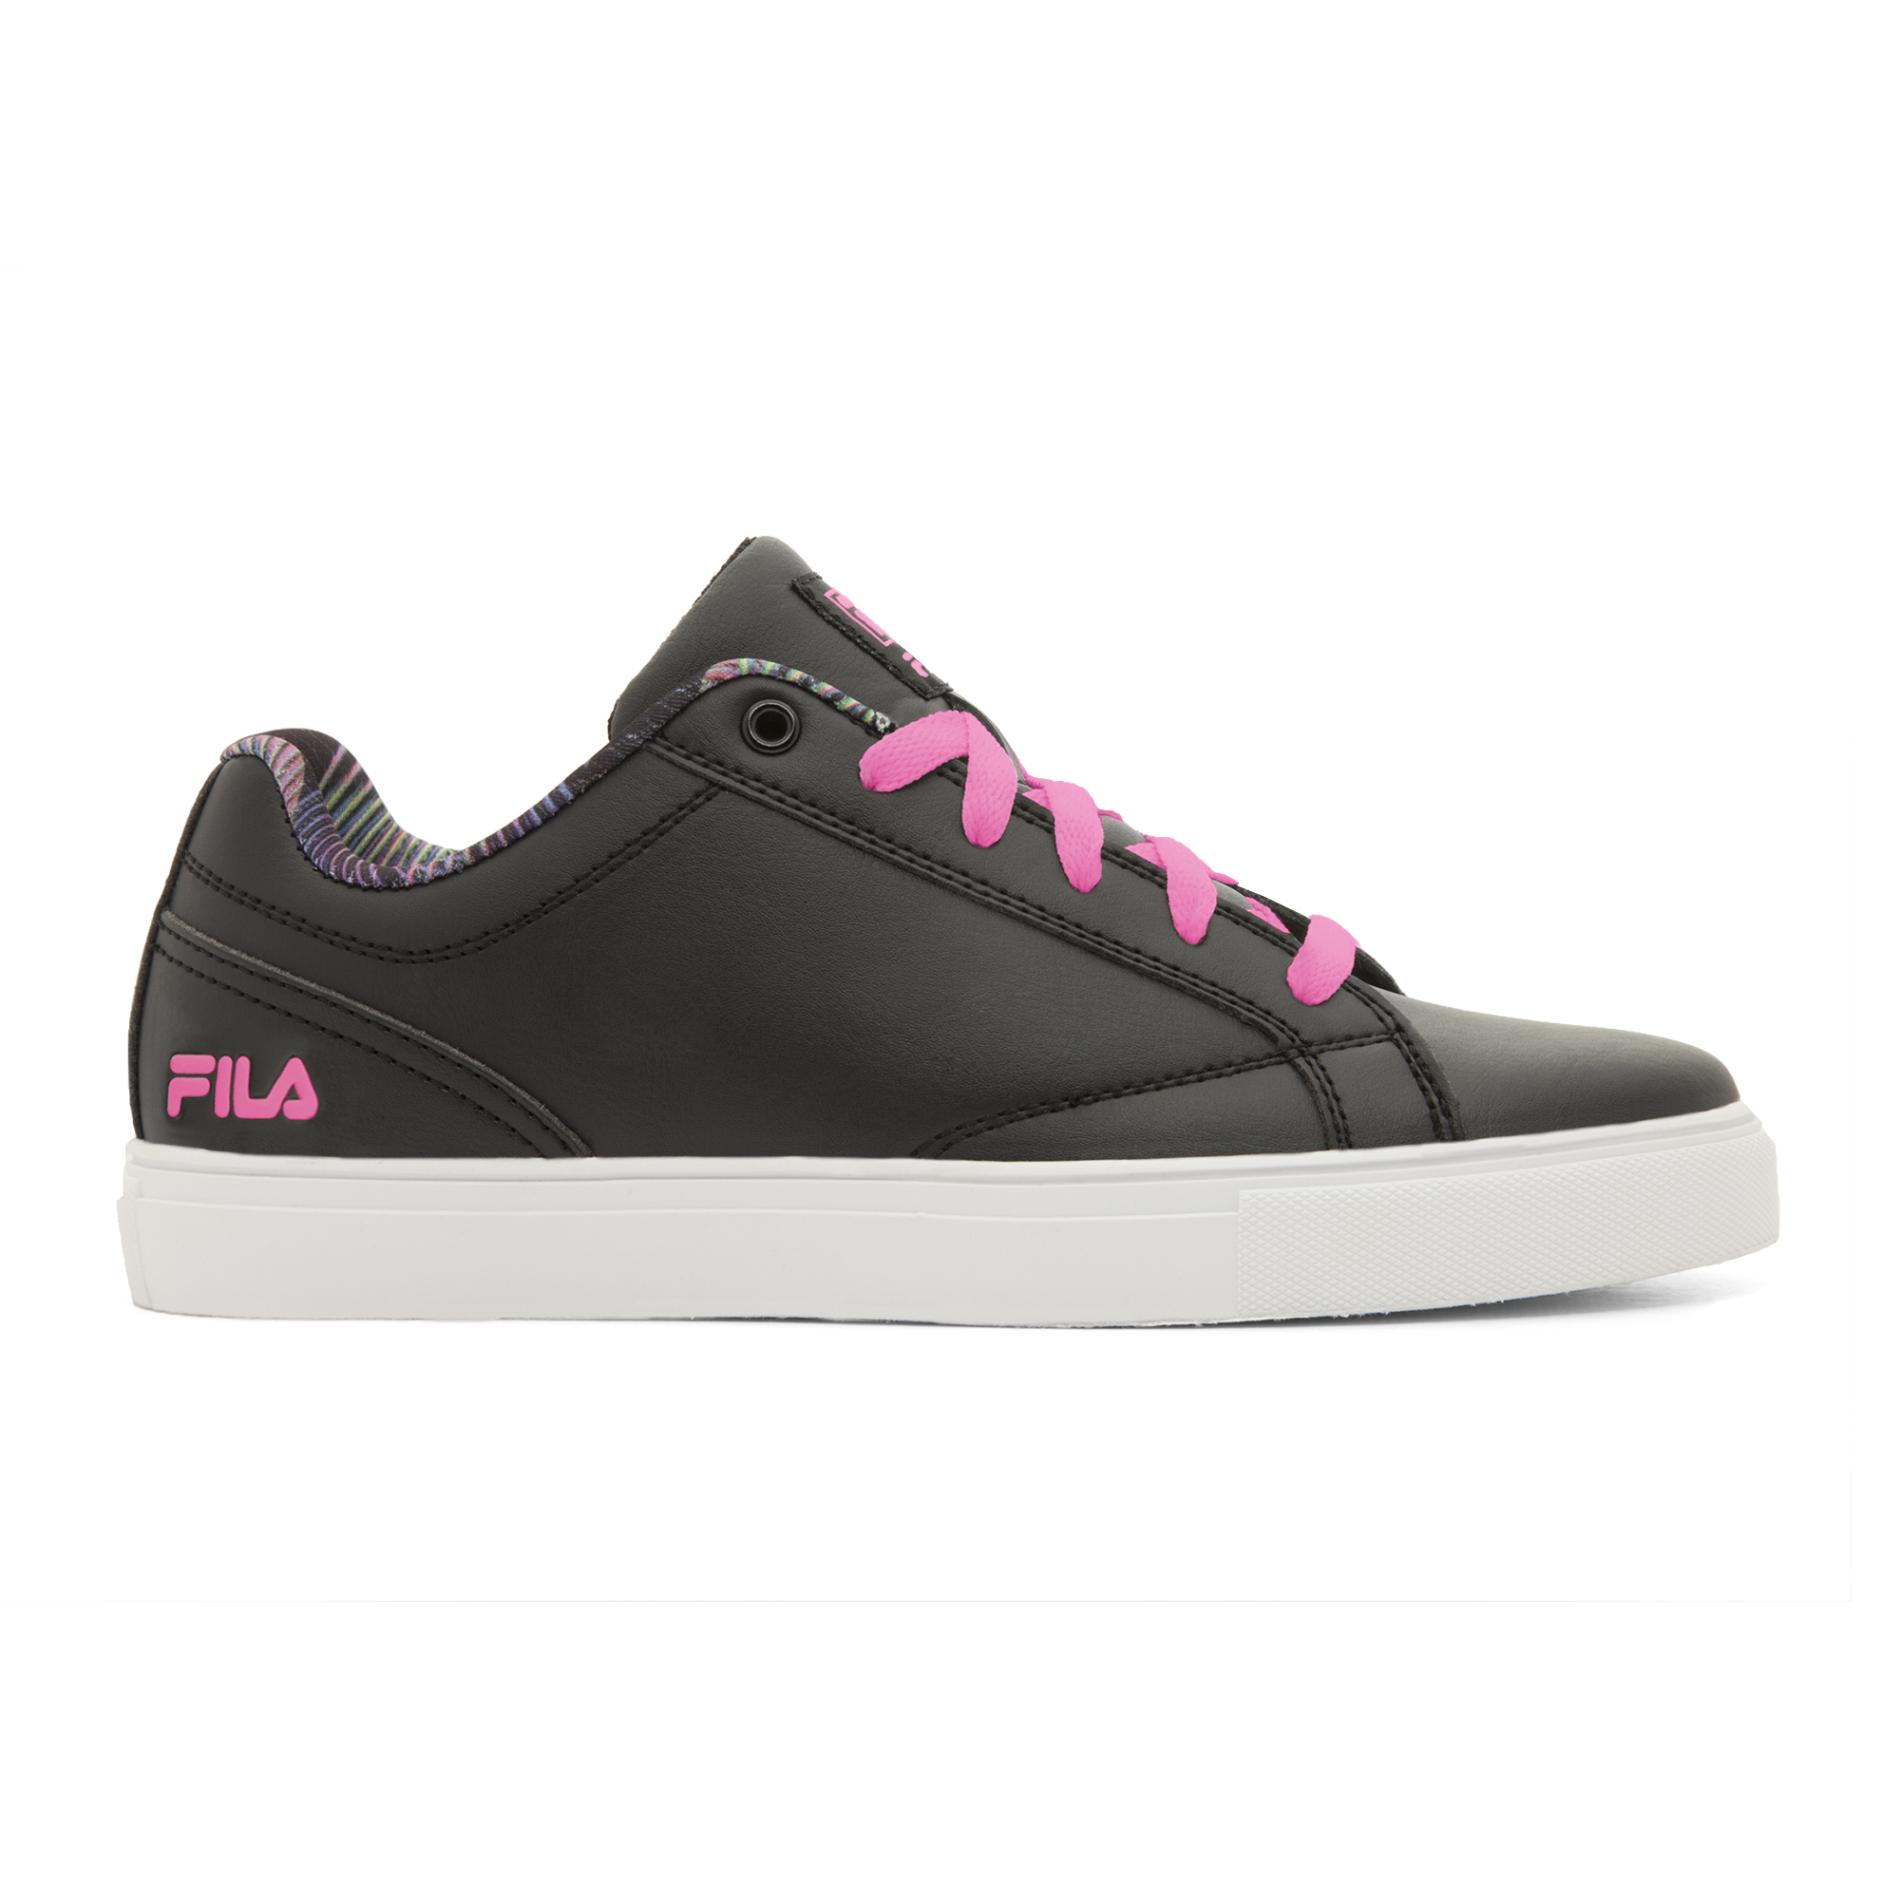 Fila Women's Amalfi Athletic Shoe - Black/Pink